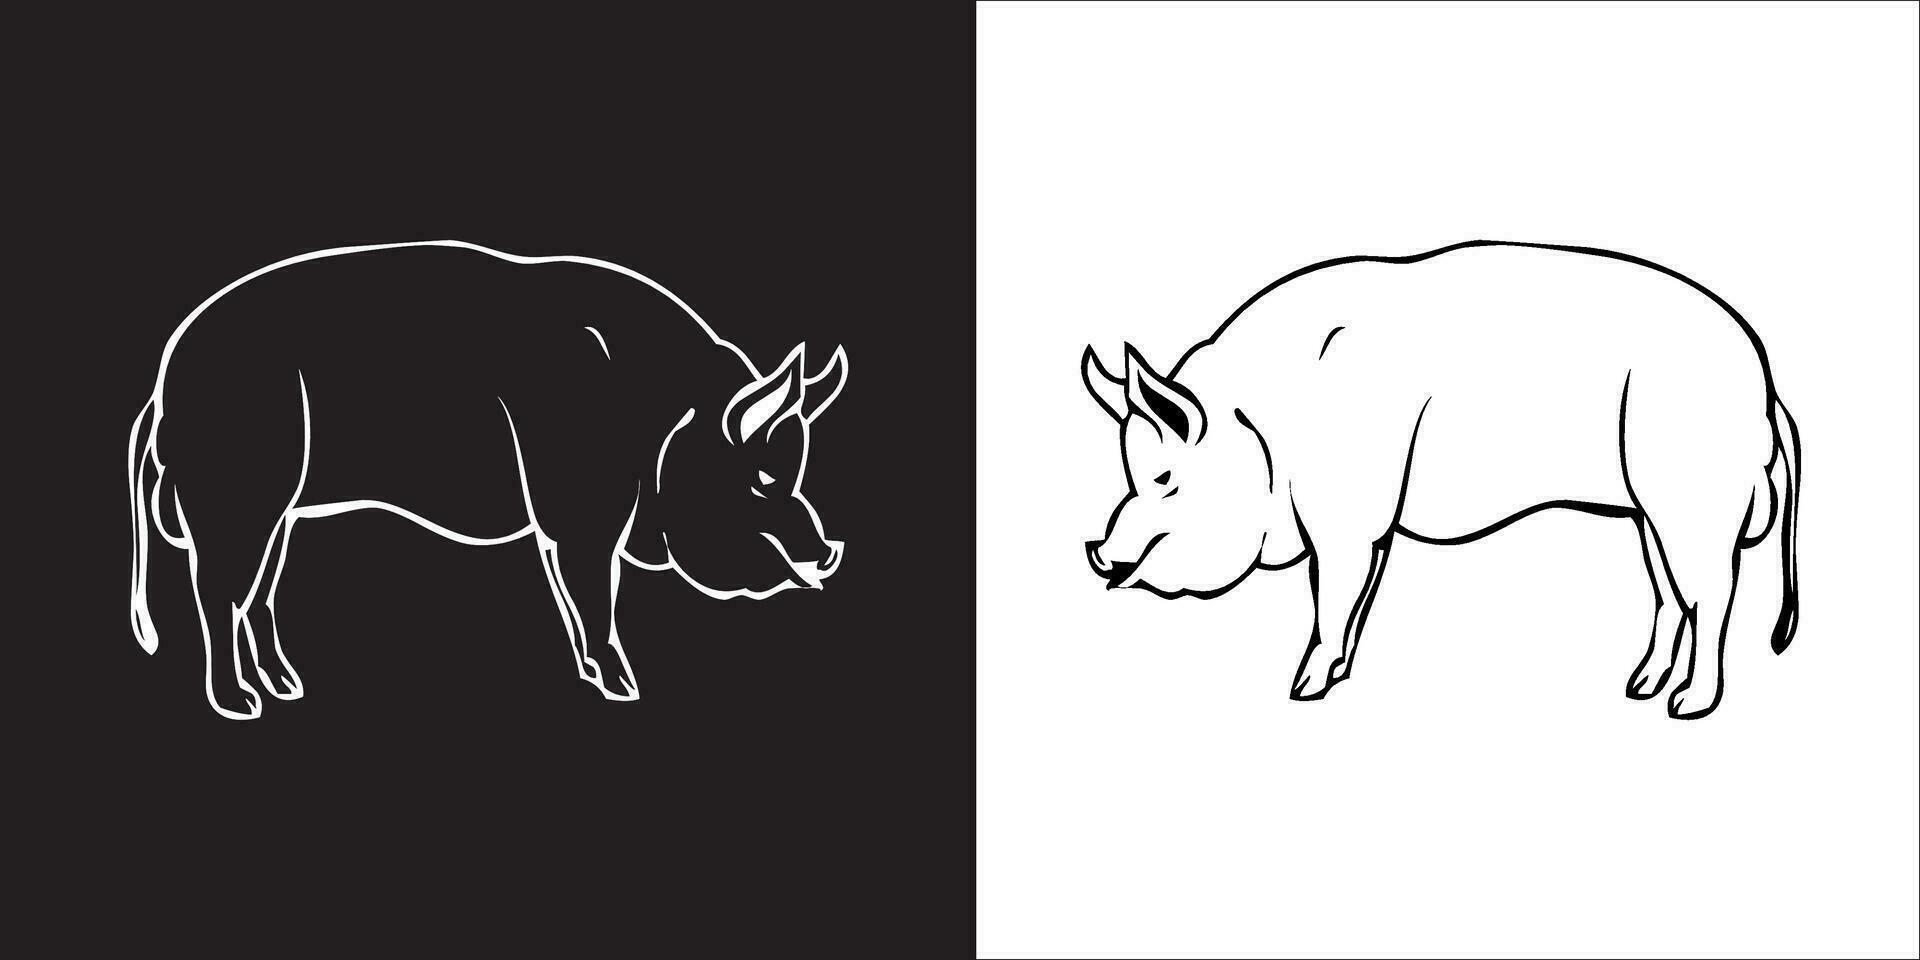 illustration vektor grafik av gris ikon